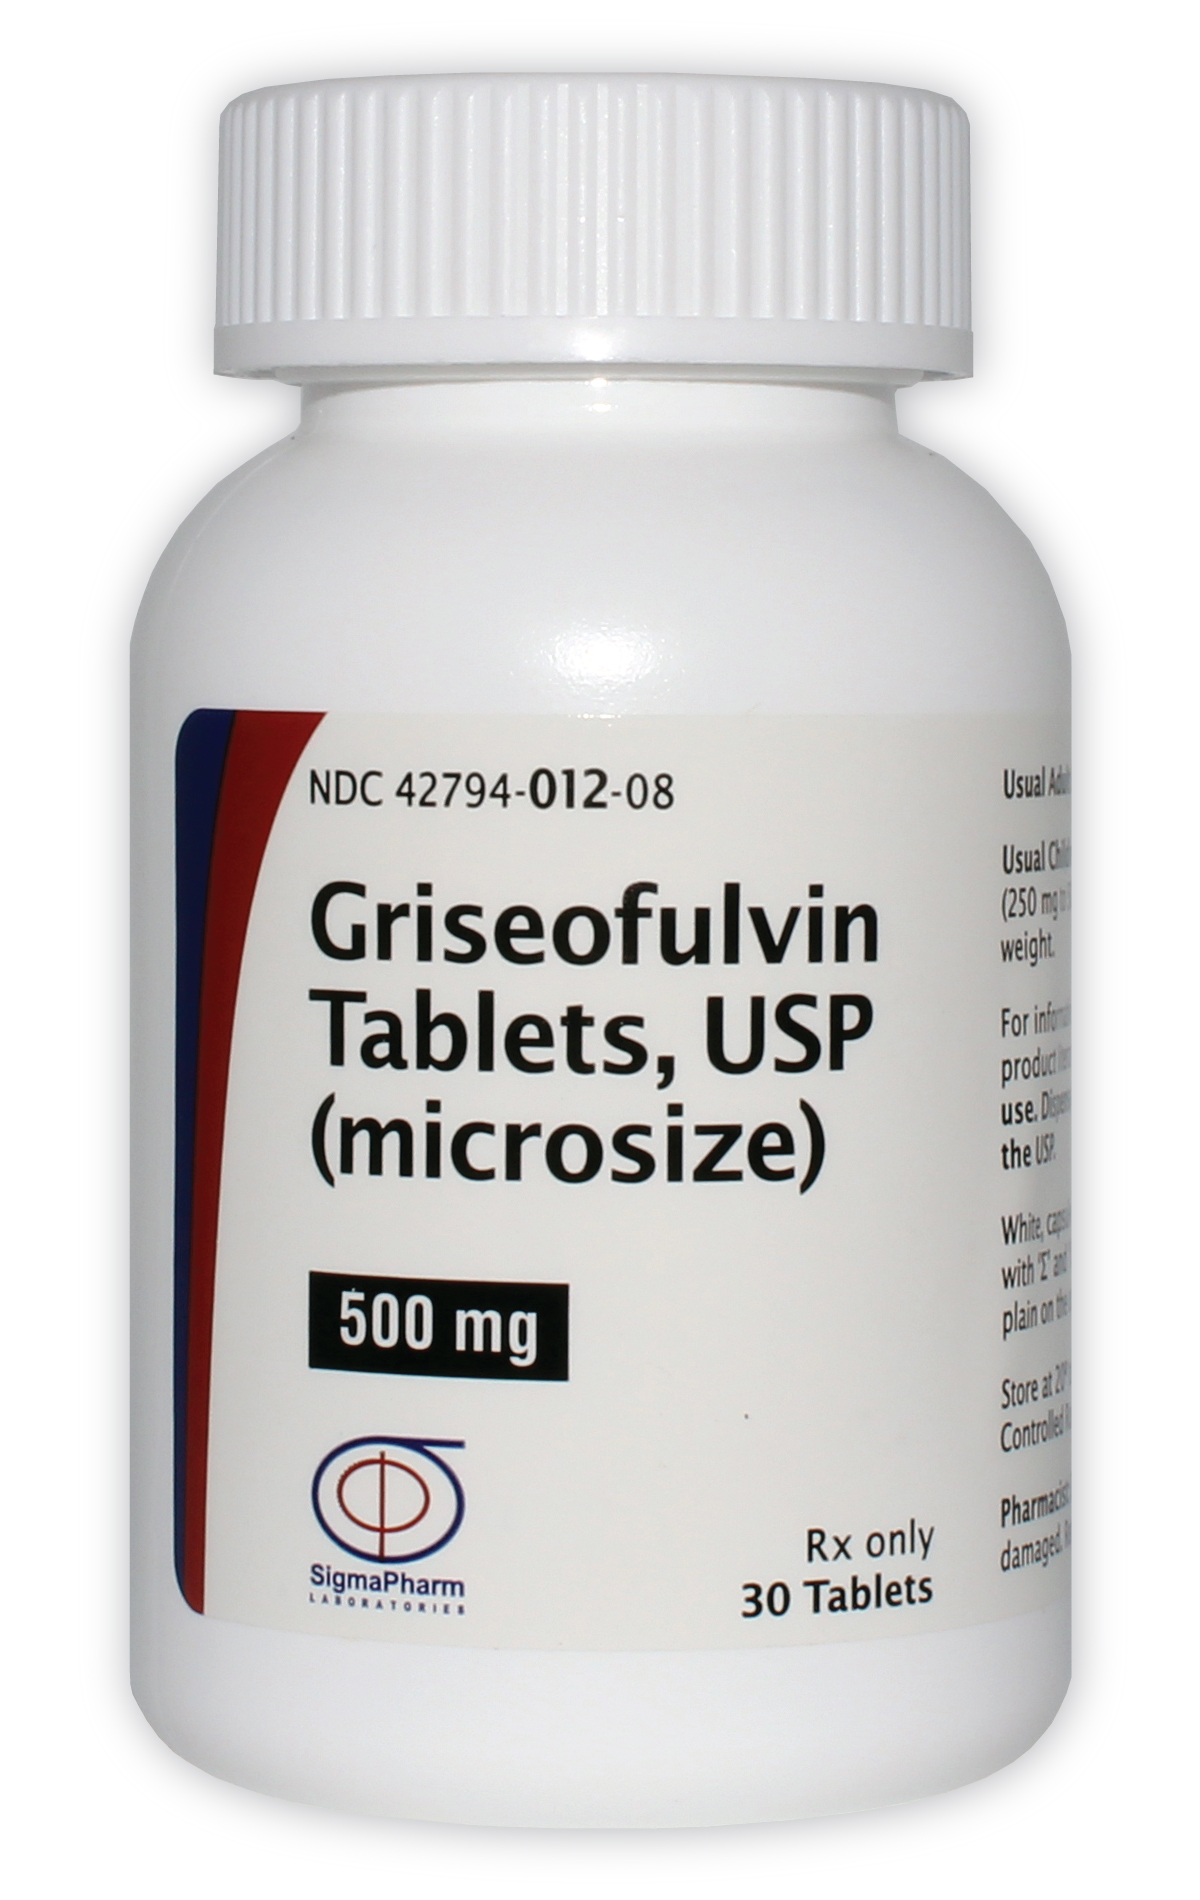 Griseofulvin Tablets, USP (microsize) (500 mg)